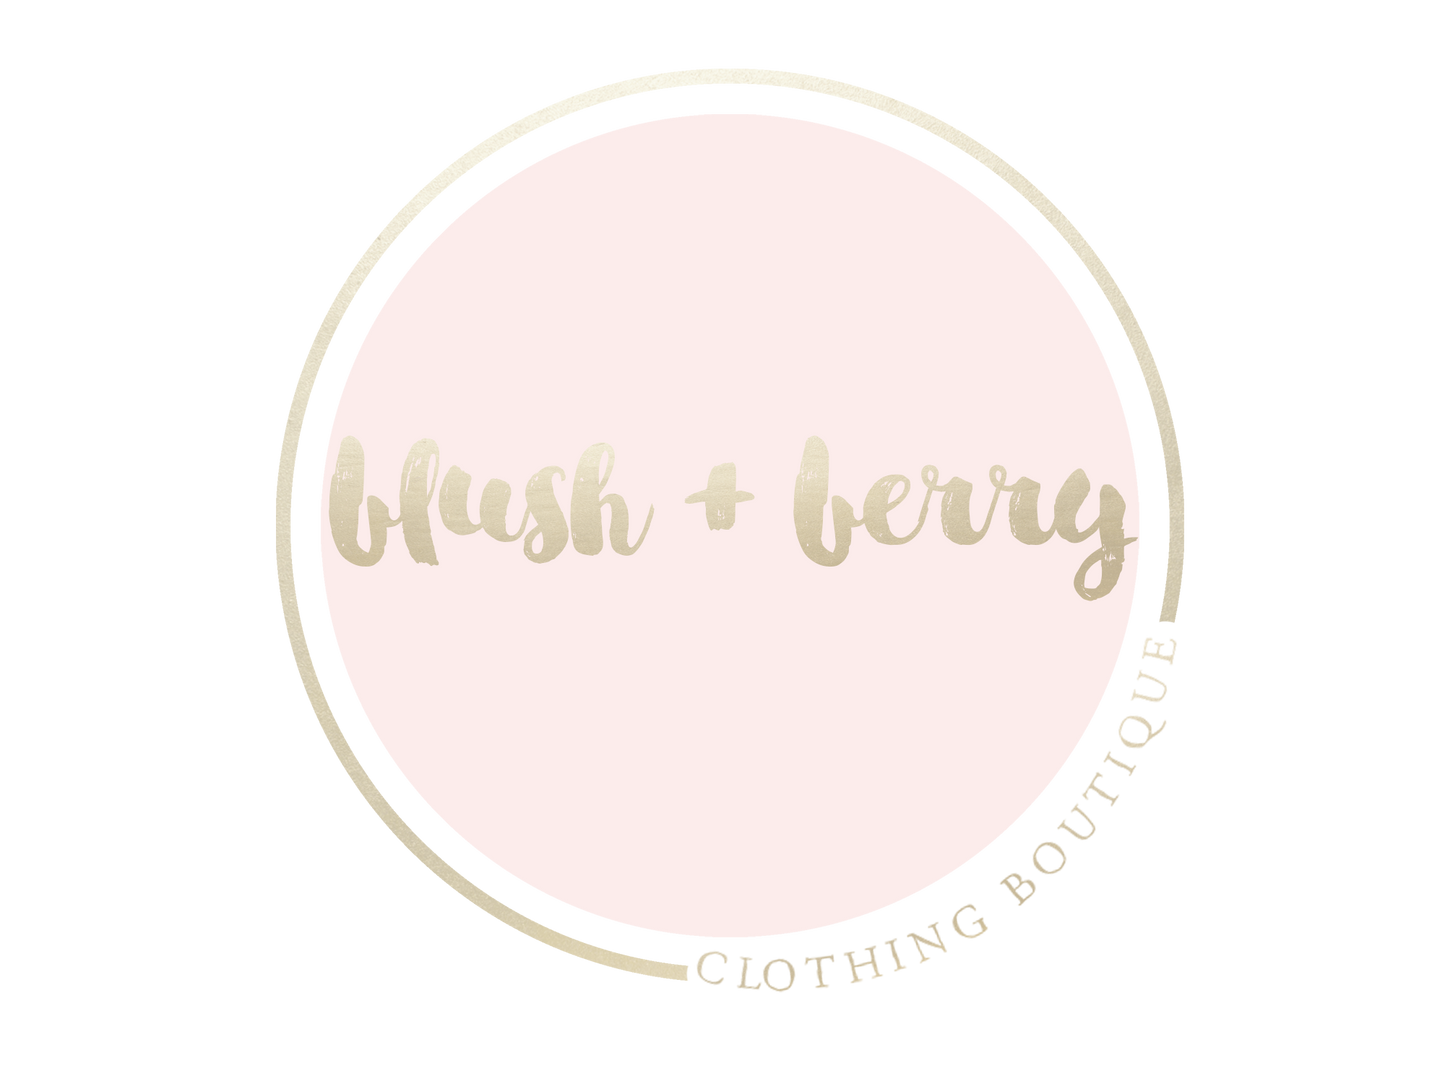 blush+berry gift card